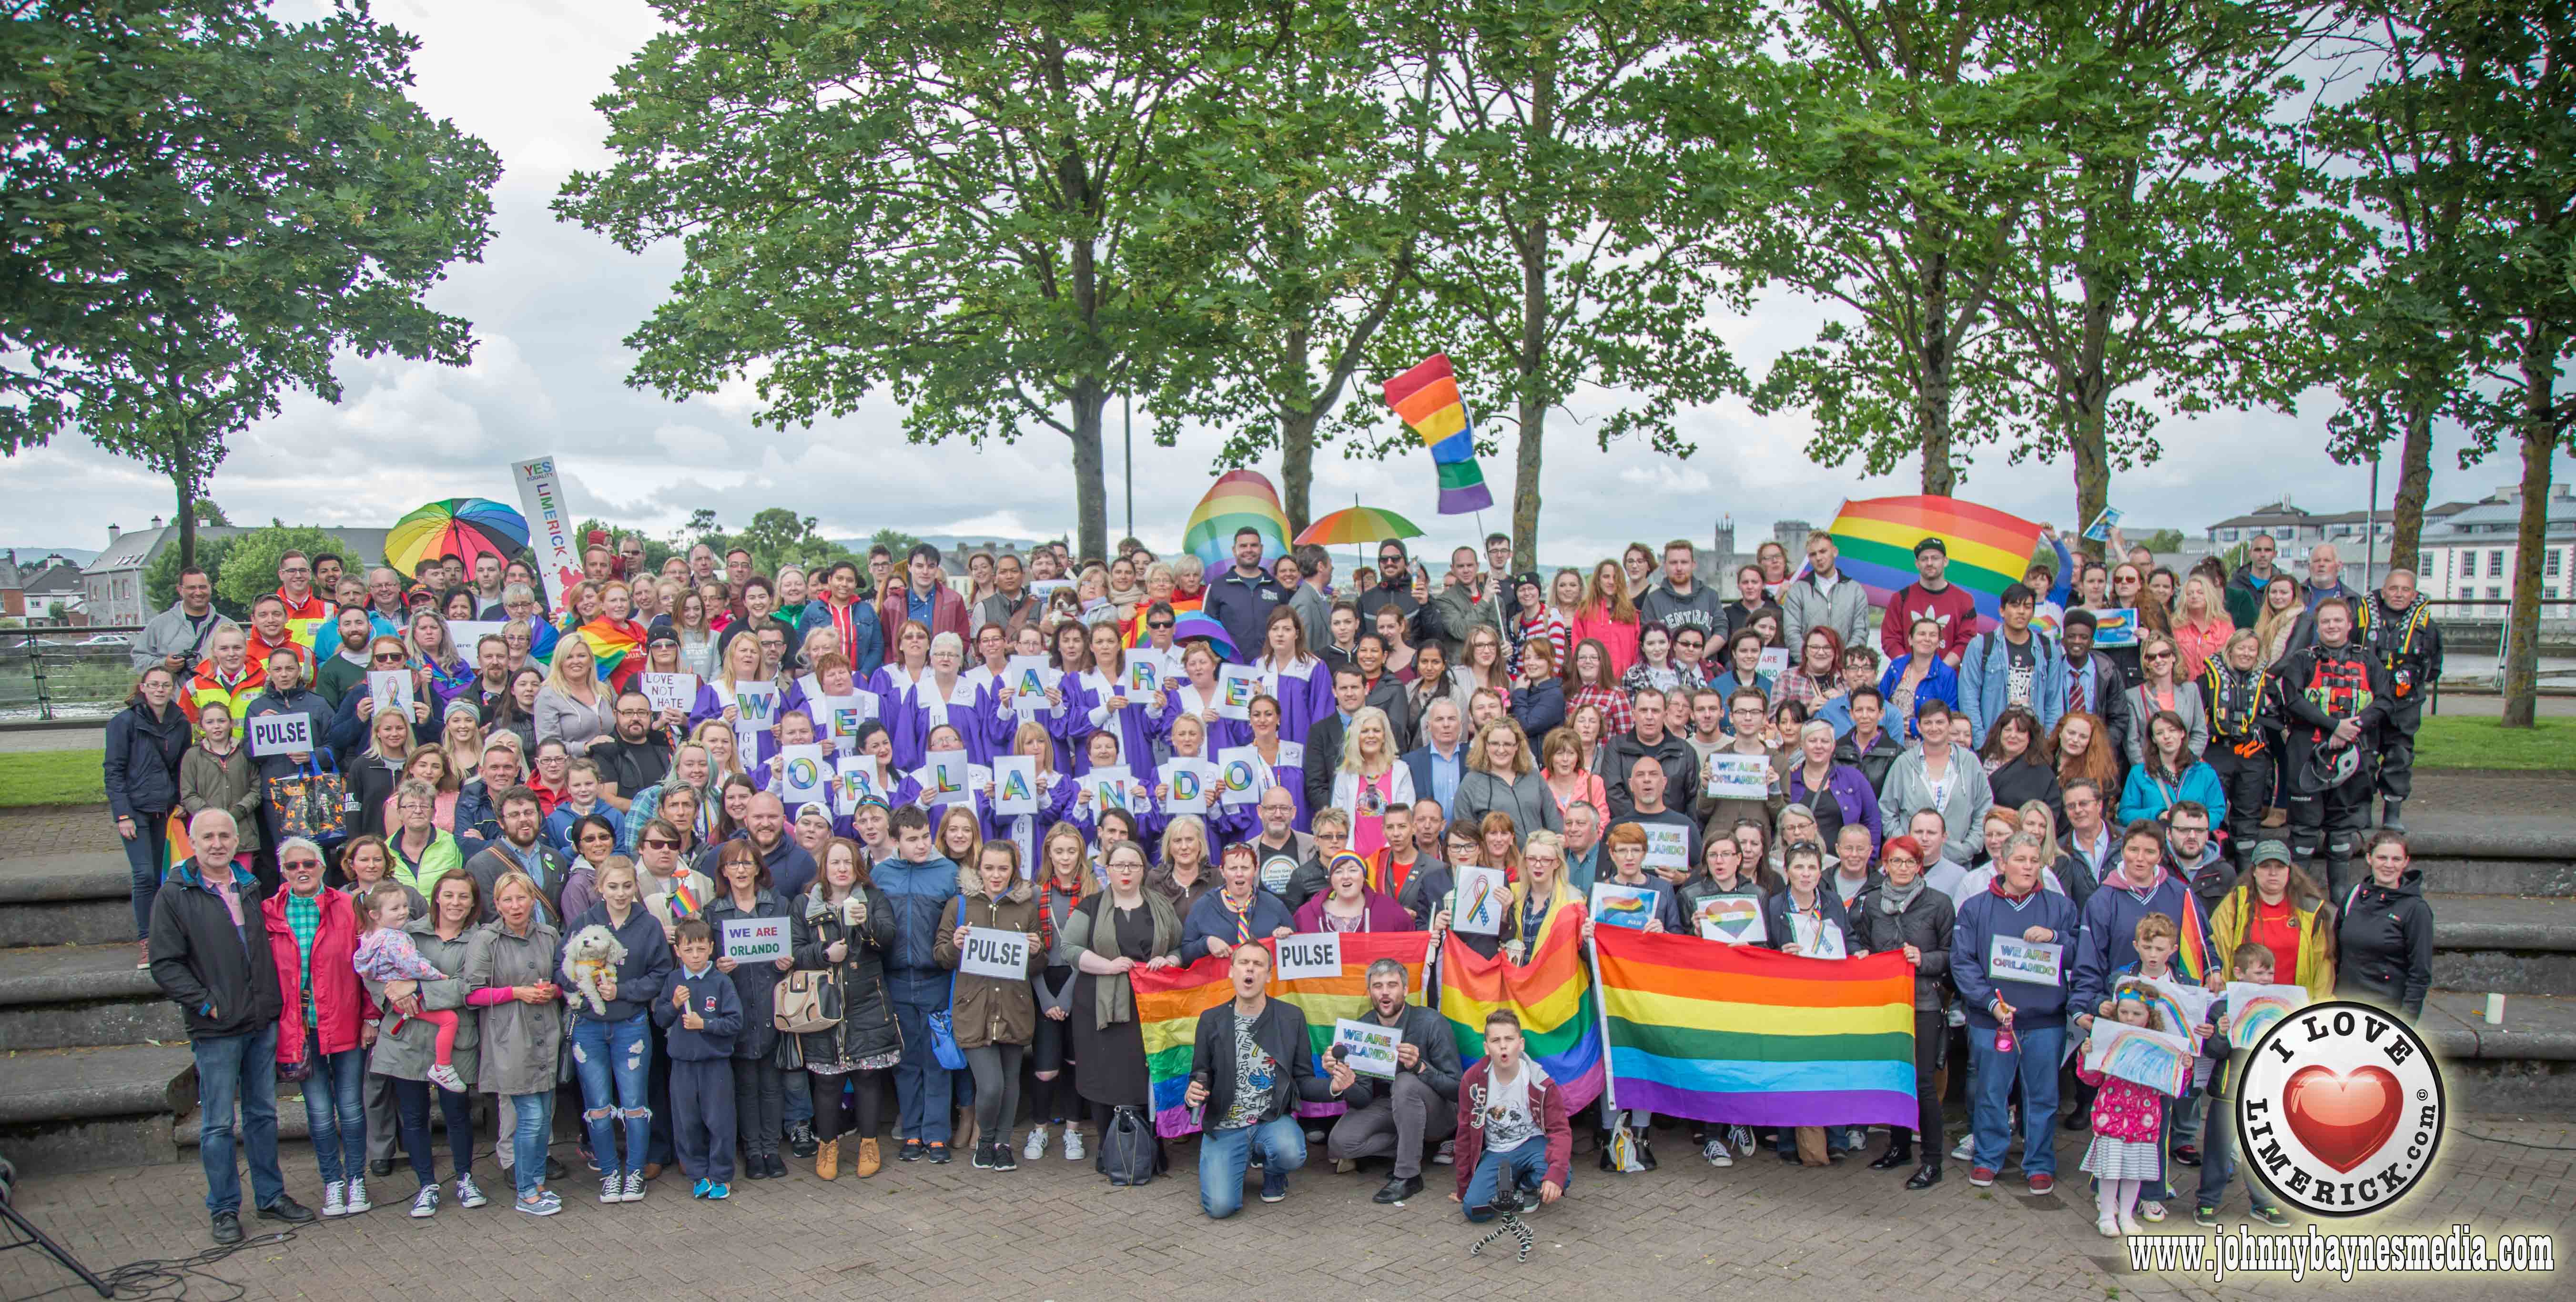 Limerick LGBT Community honour Orlando victims